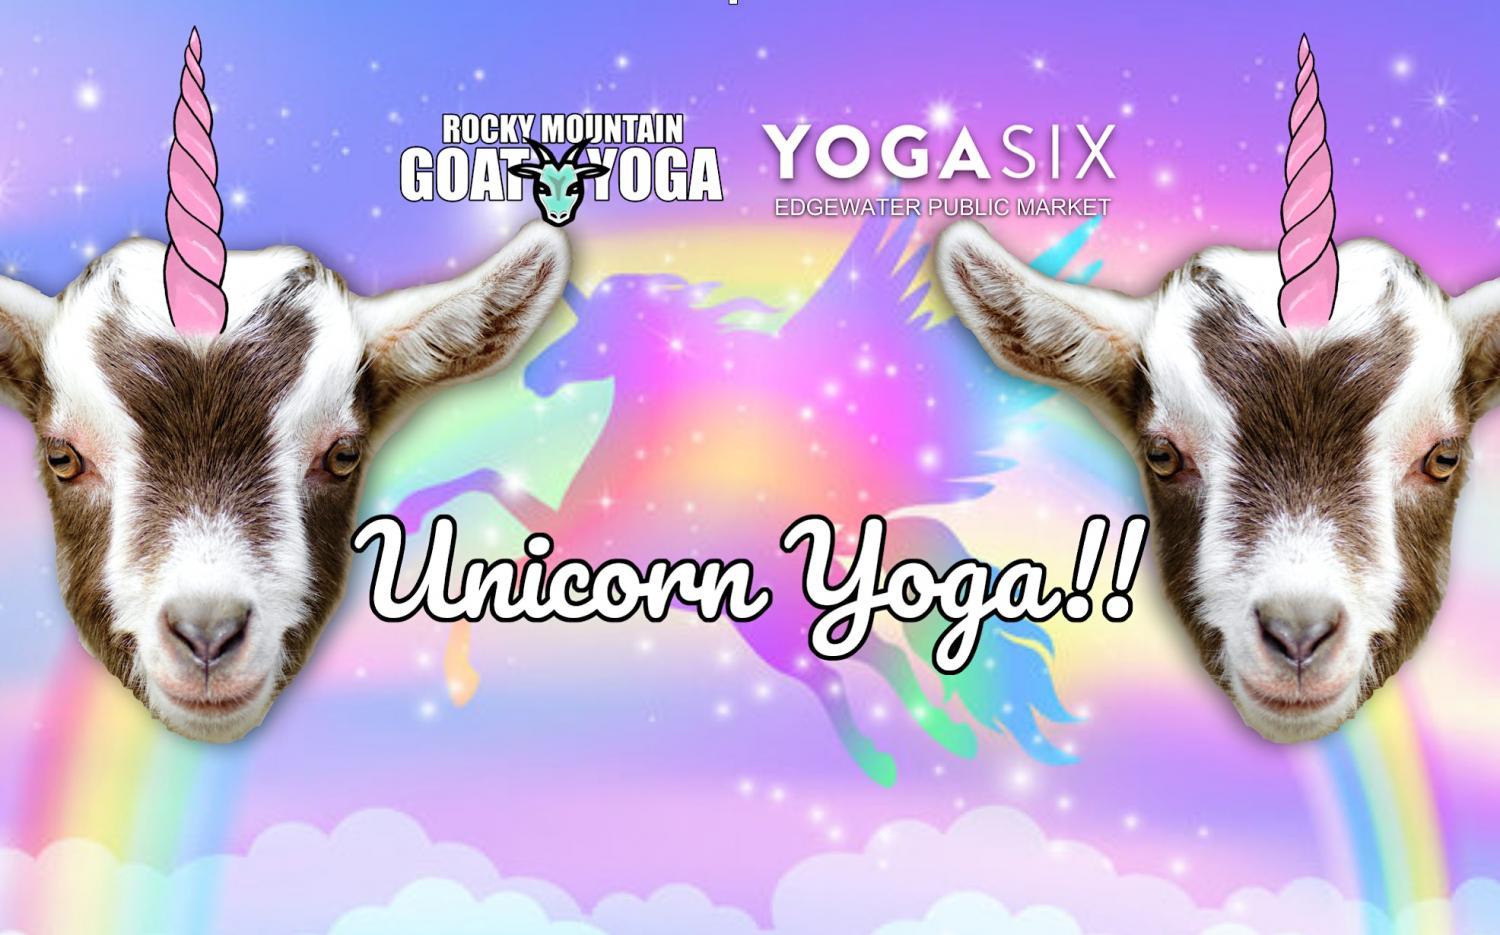 Unicorn Yoga - October 15th (YOGA SIX - EDGEWATER)
Sat Oct 15, 10:00 AM - Sat Oct 15, 1:00 PM